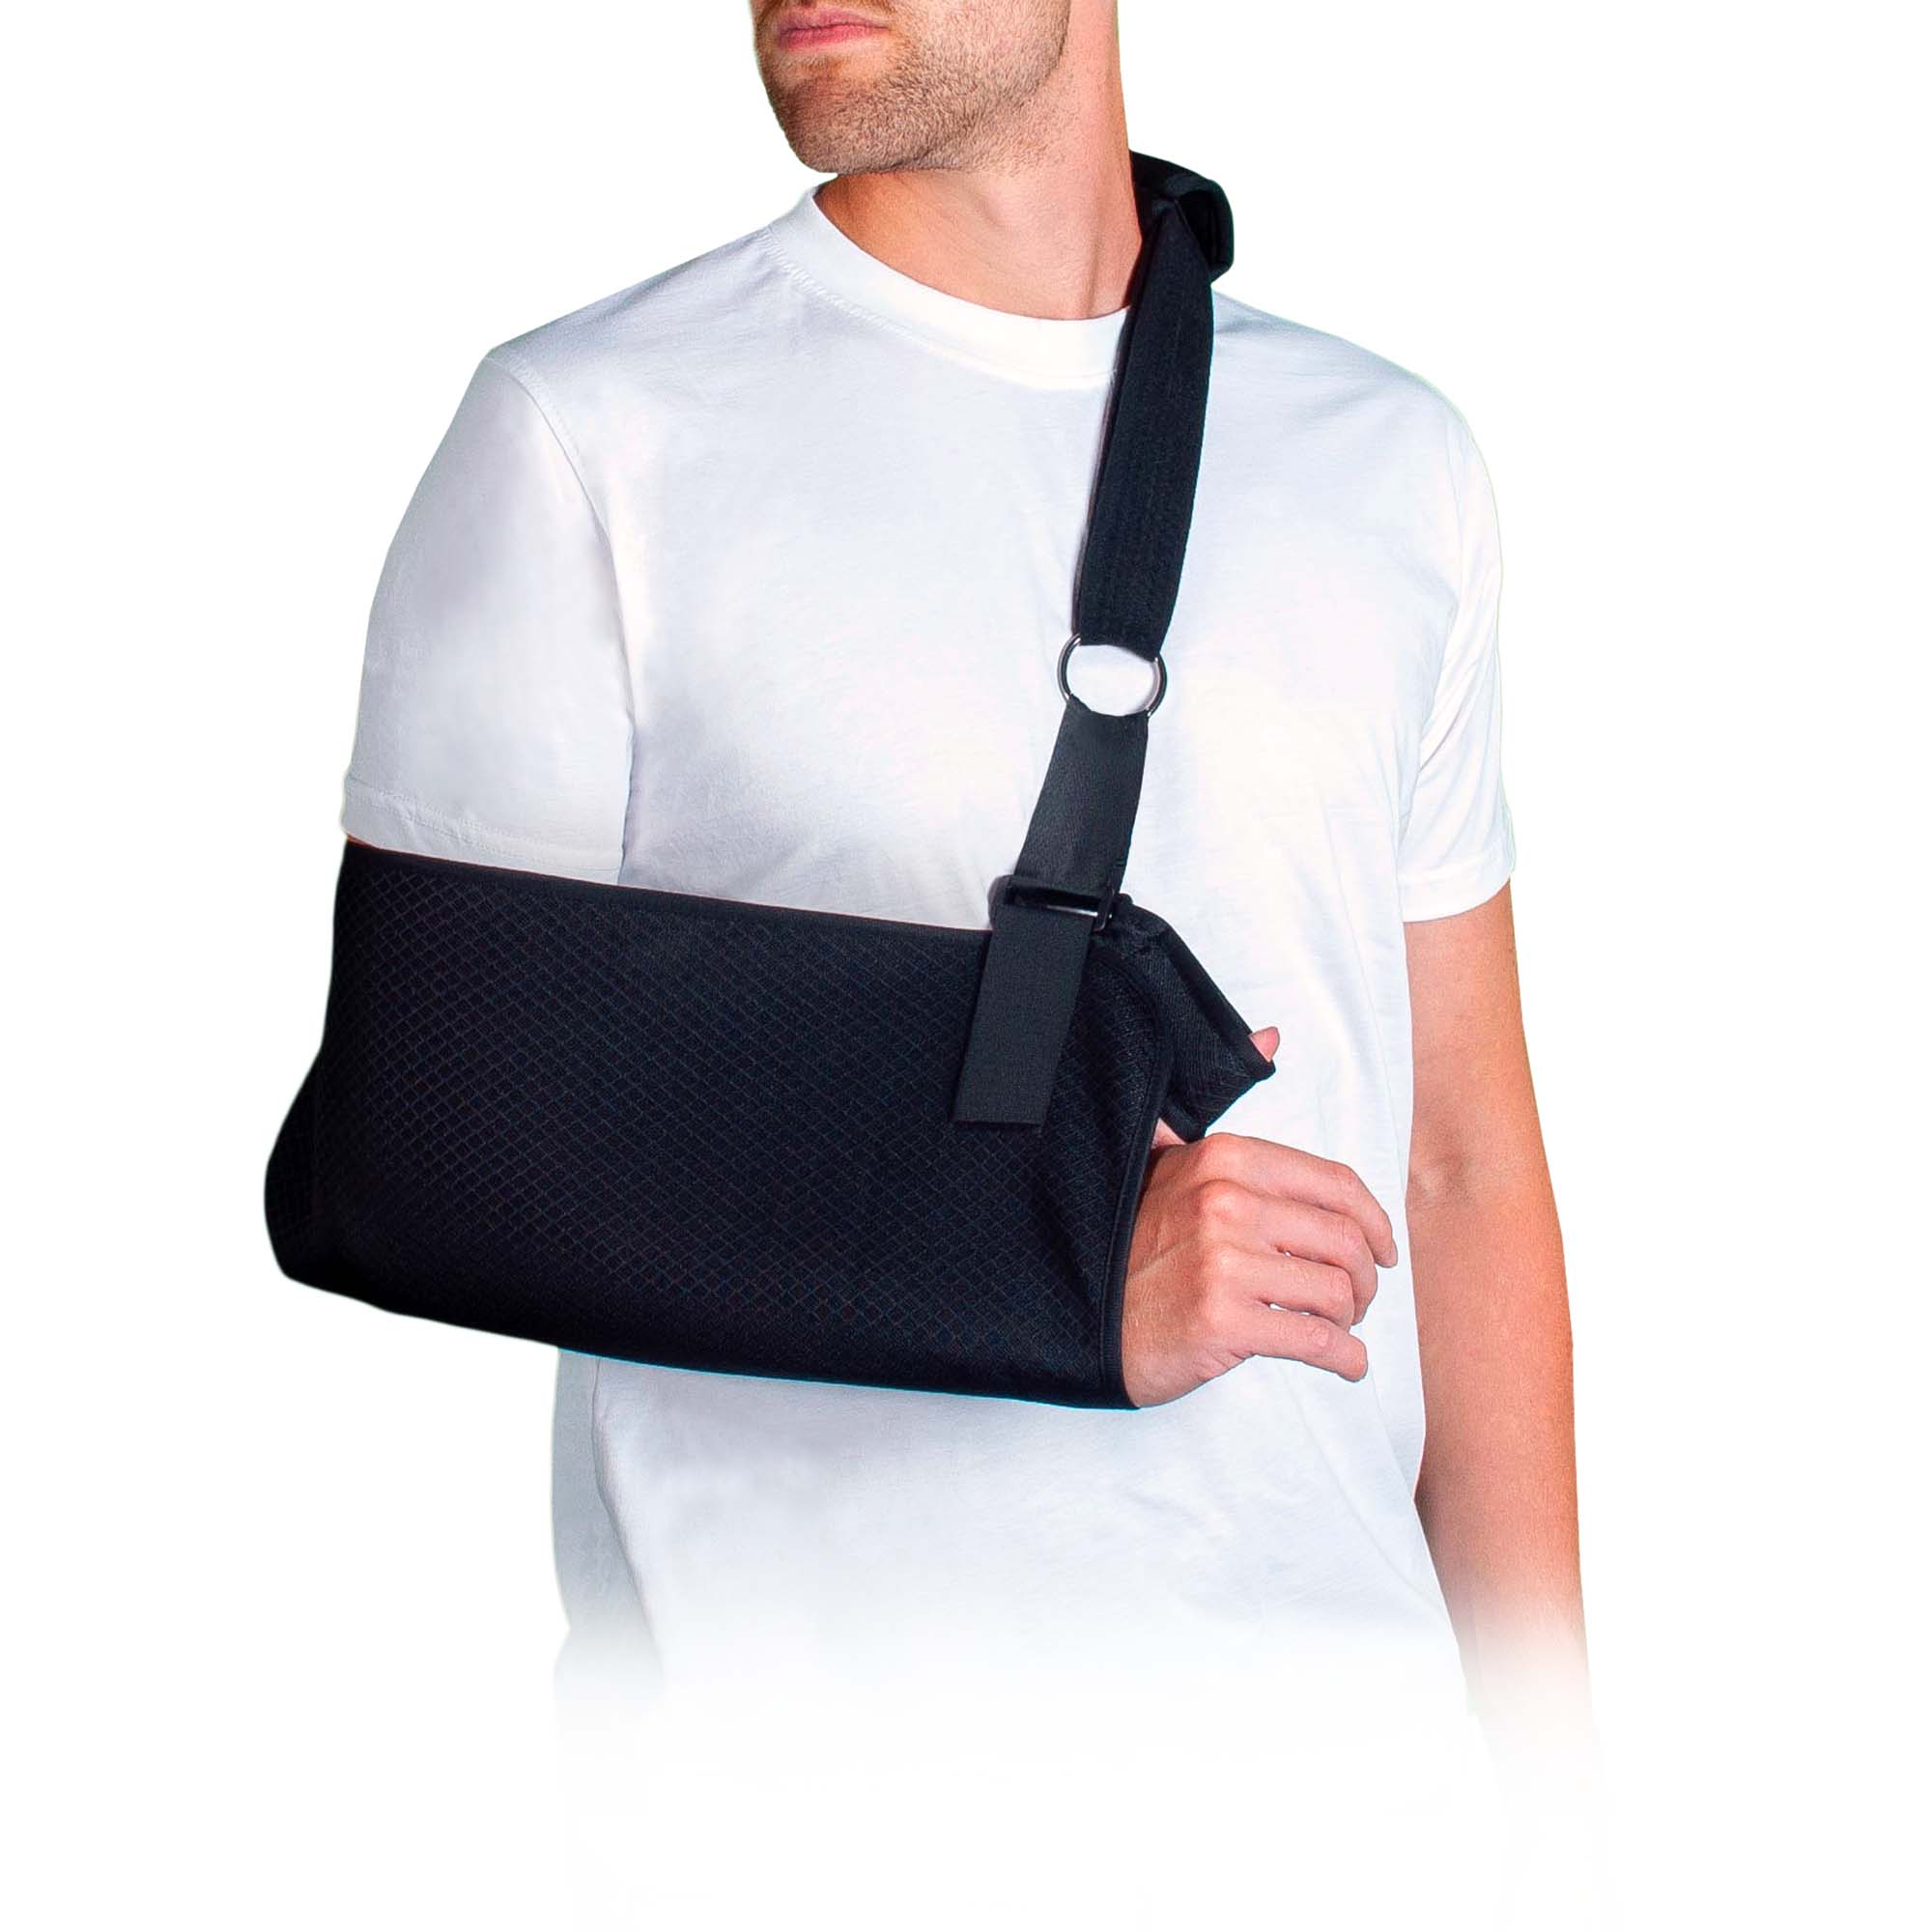 dunimed premium comfort arm sling